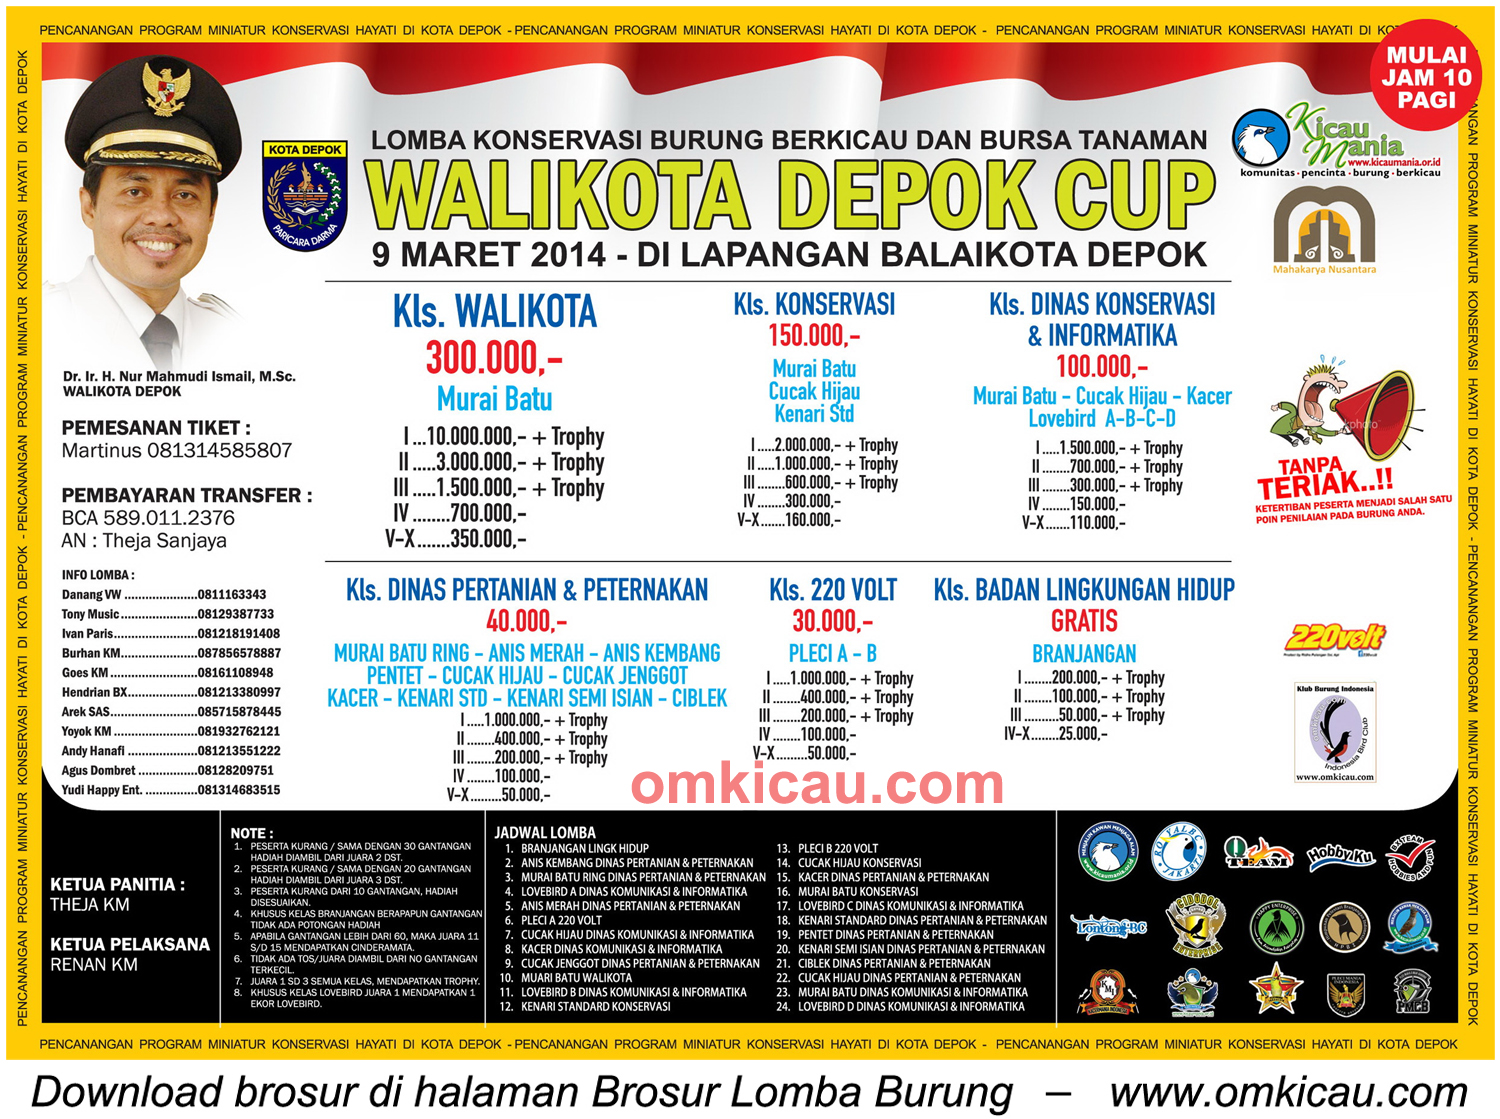 Brosur Lomba Burung Berkicau Wali Kota Depok Cup, Depok, 9 Maret 2014